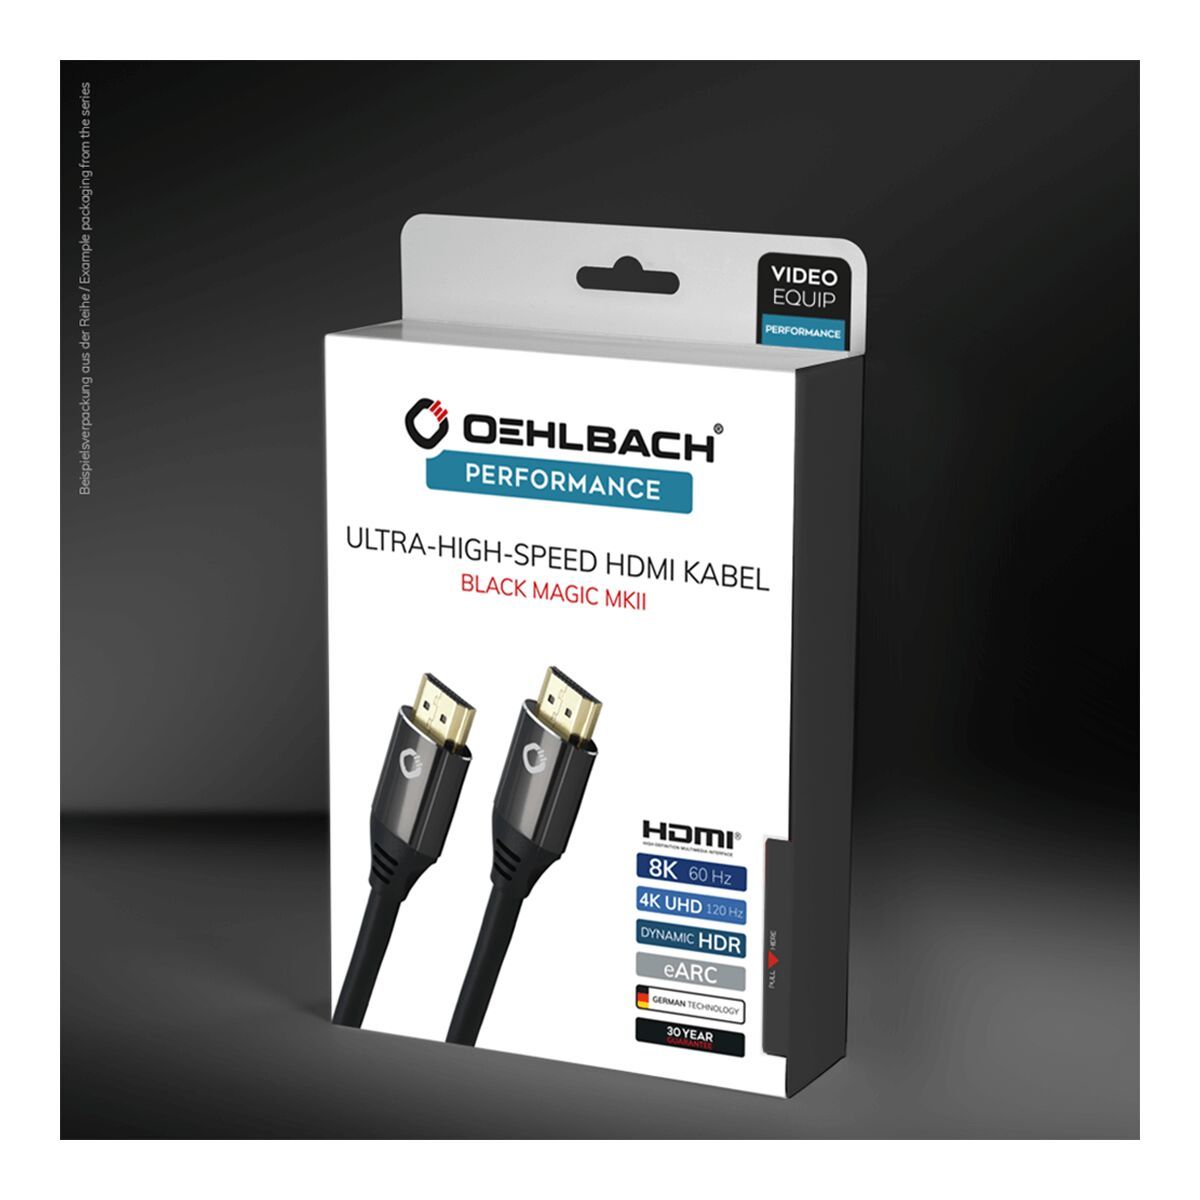 Vogel's Oehlbach Black Magic HDMI® kabel (3 meter) Zwart Pack shot 3D